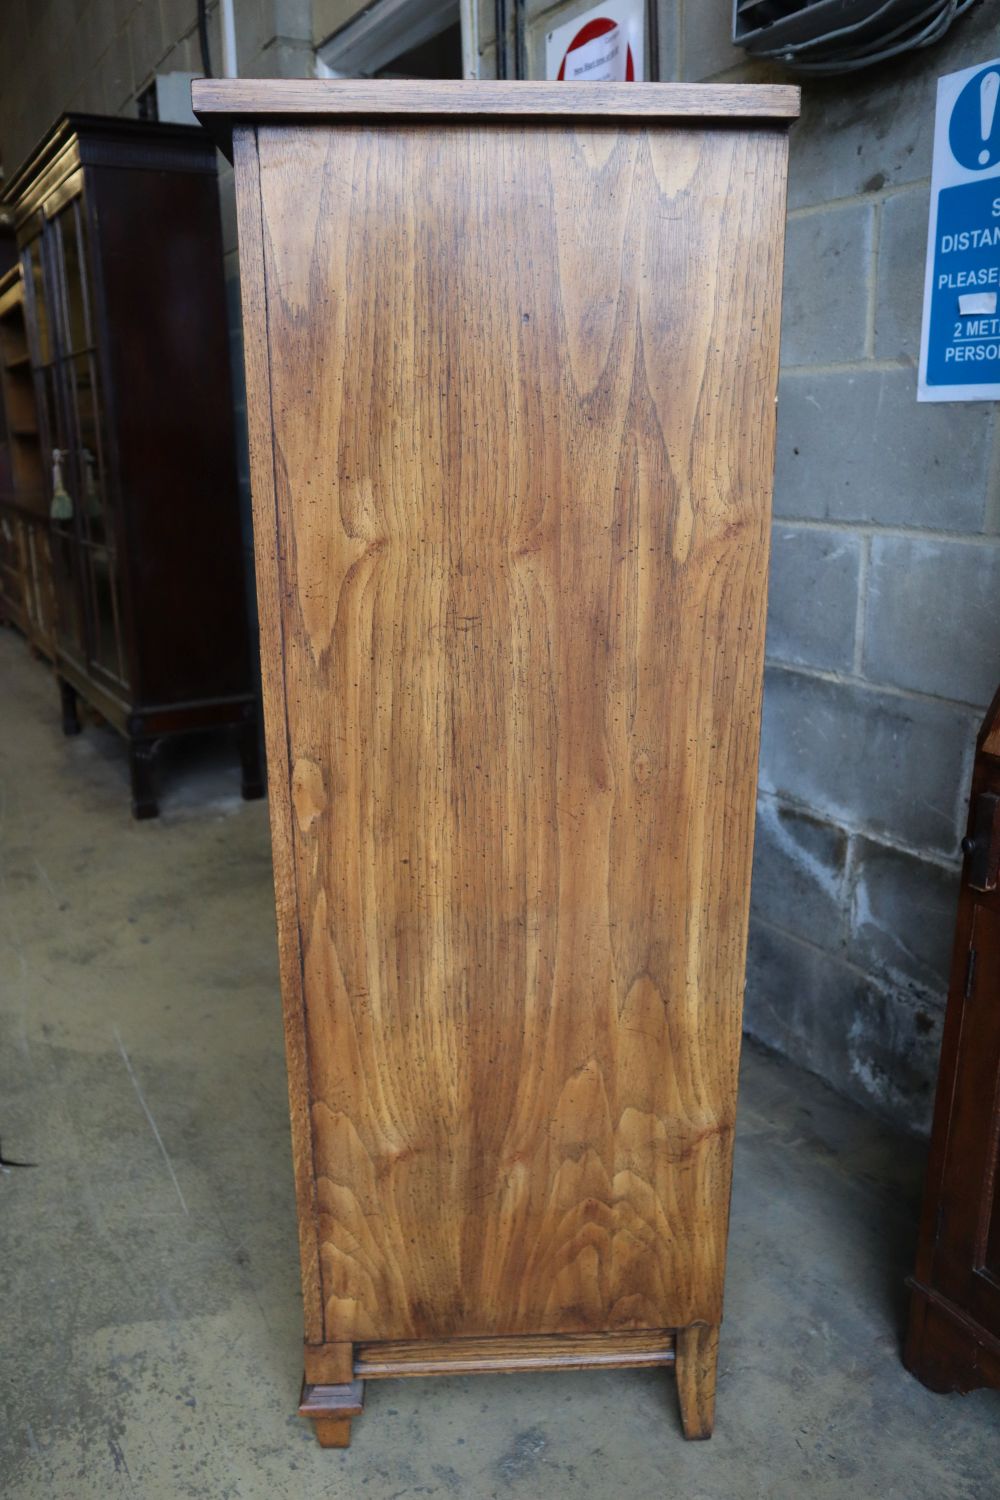 An American stencilled walnut six drawer tall chest, width 61cm, depth 46cm, height 132cm